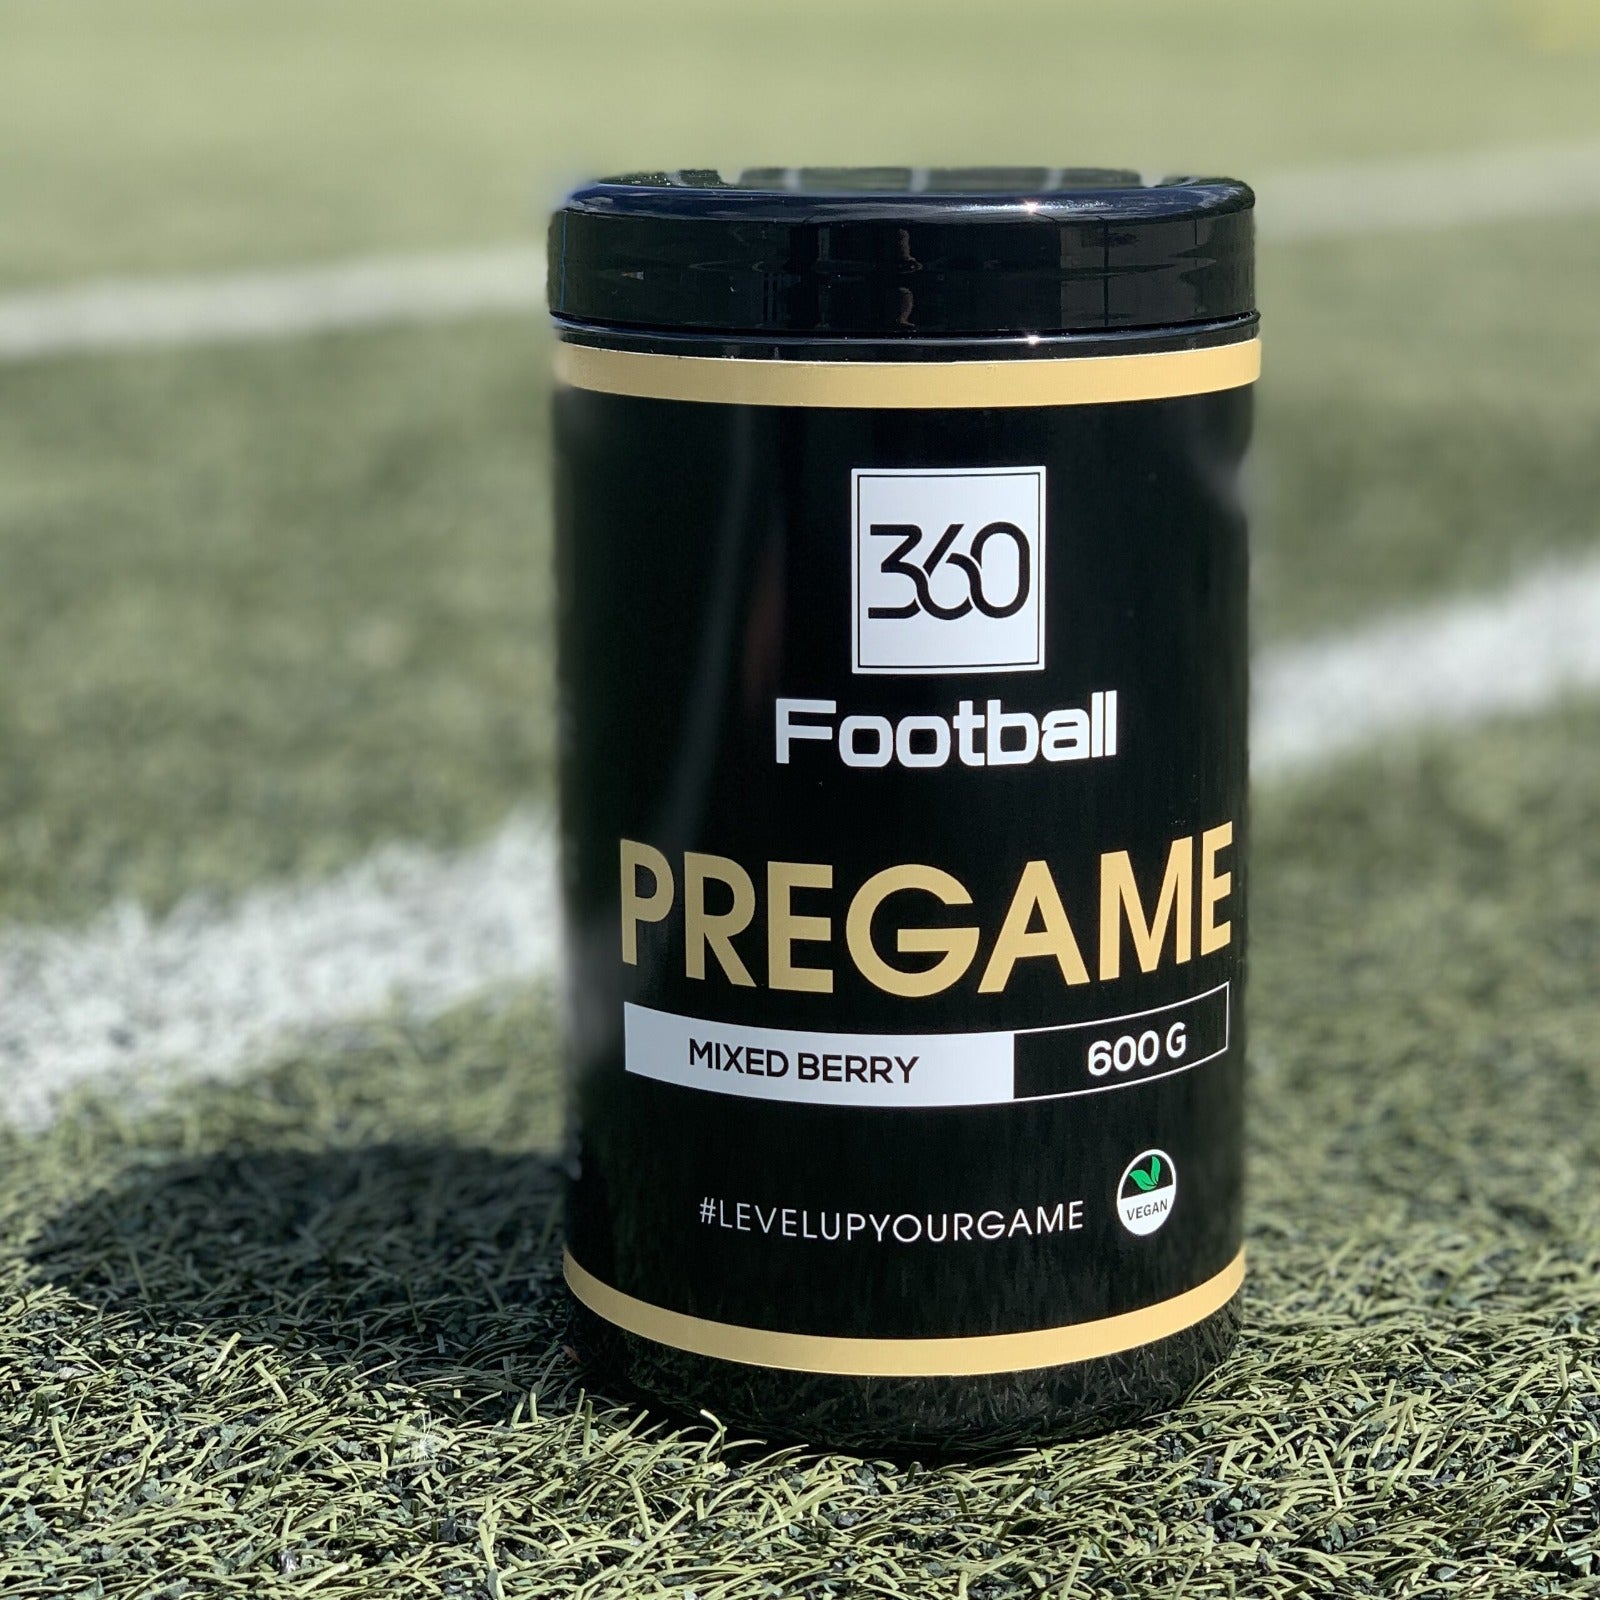 Produktbild des 360Football Pregame Supplements. Schwarze Dose, weiss/golden beschriftet auf dem Fussballplatz.